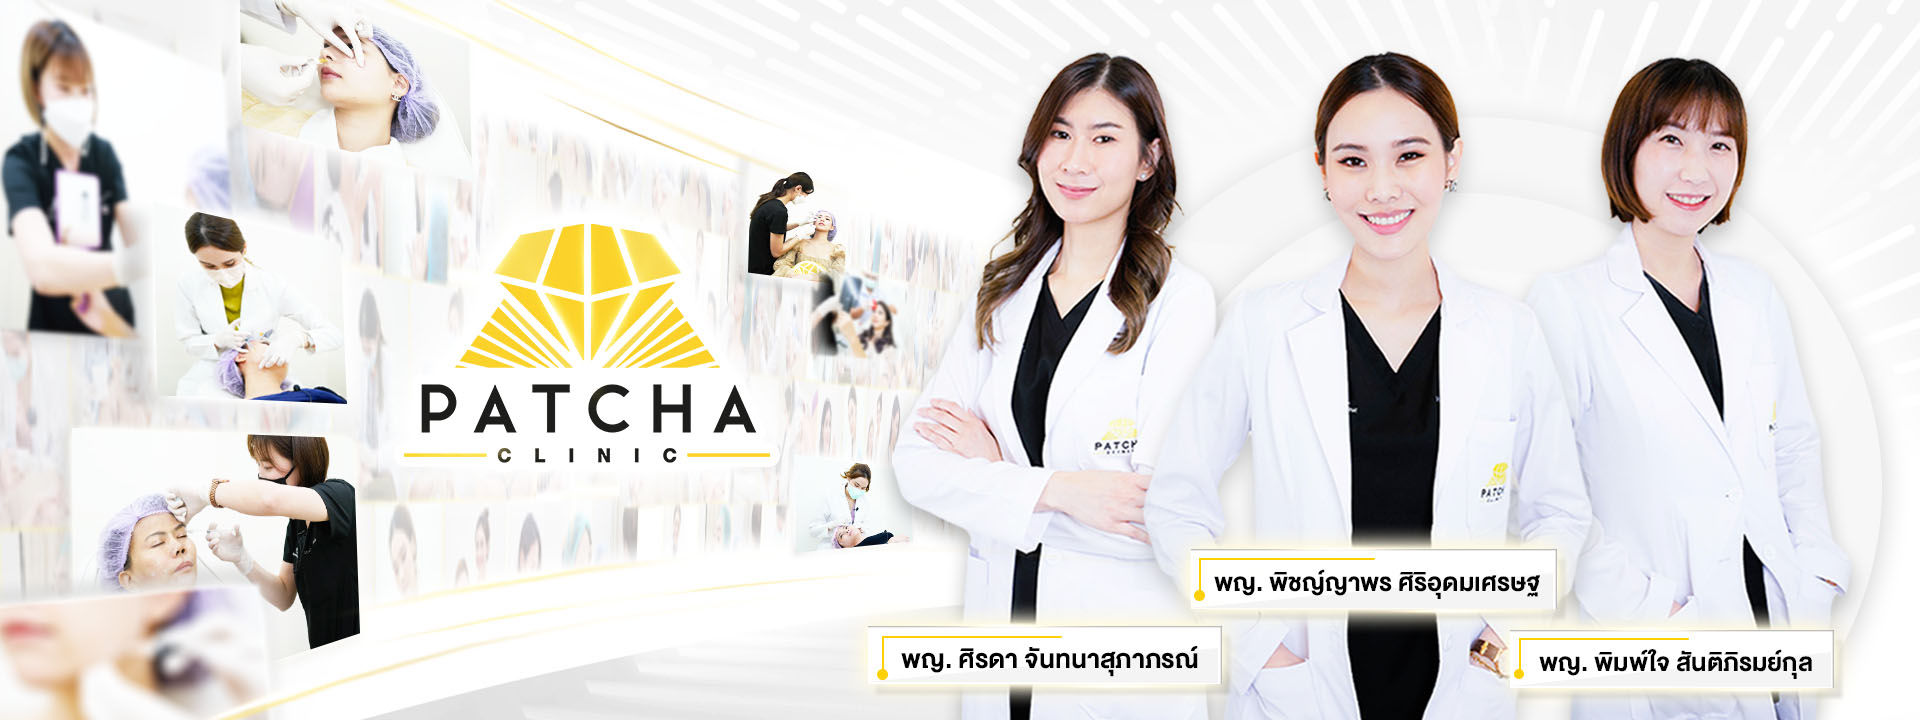 Patcha Clinic